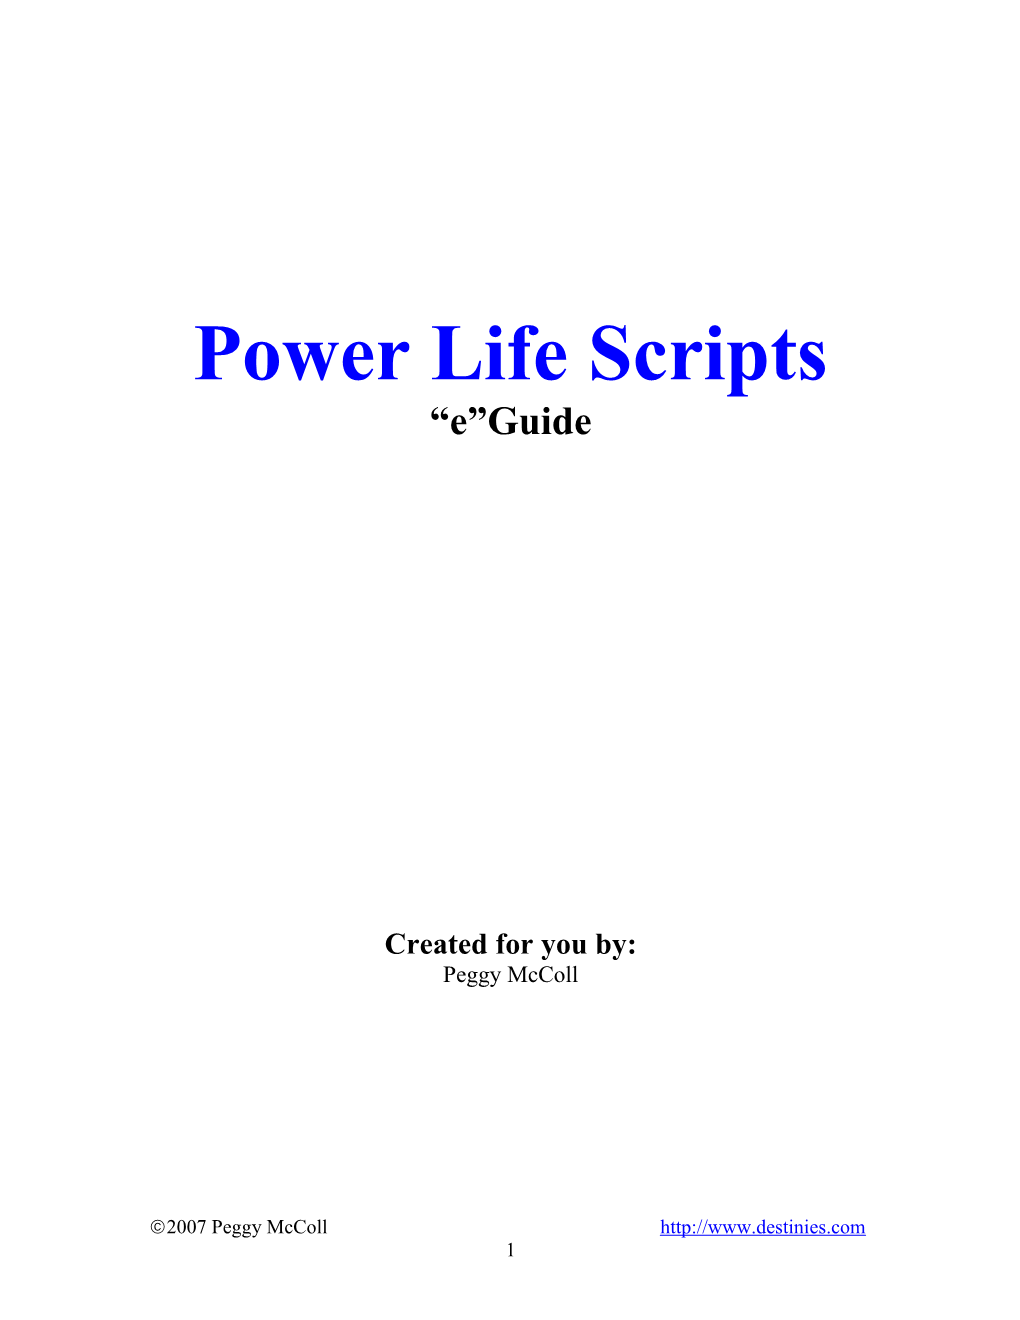 Power Life Scripts E Guide